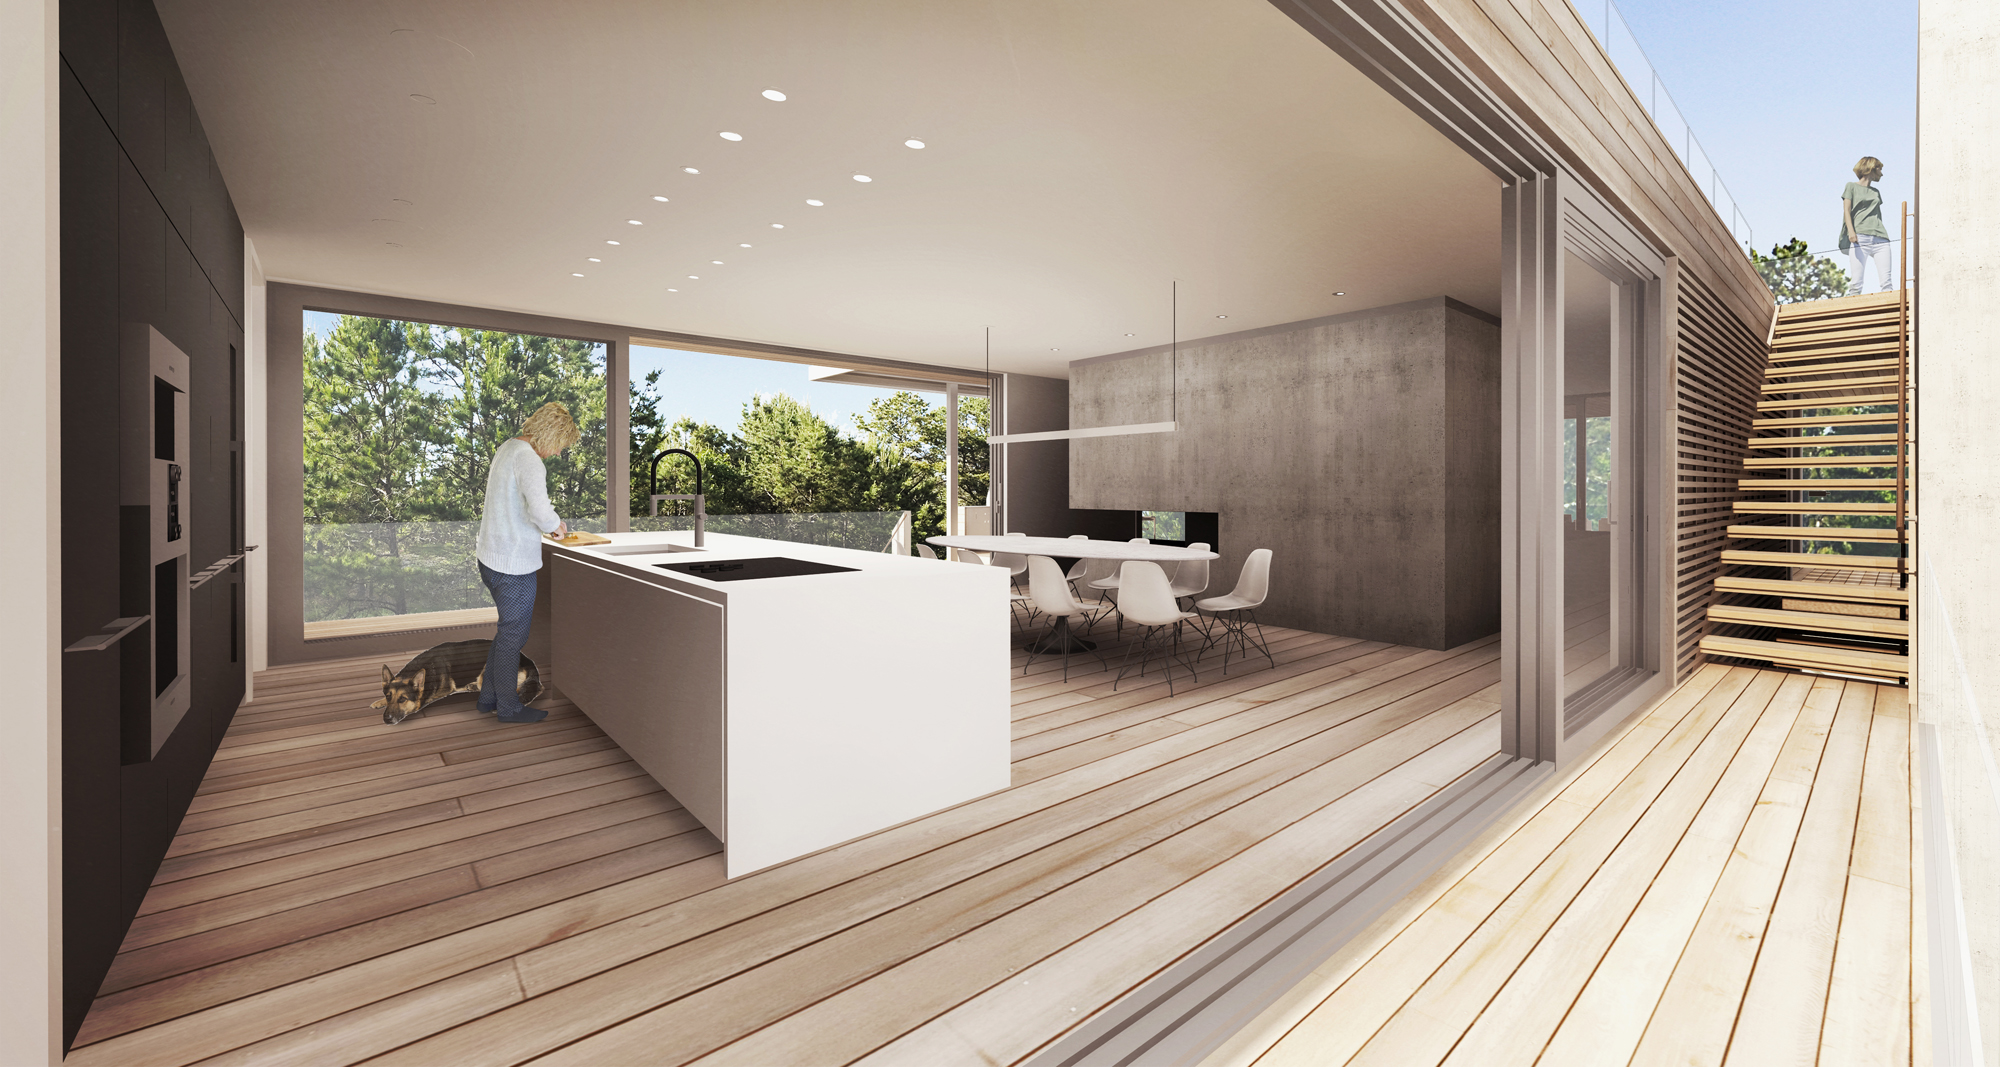 res4-resolution-4-architecture-modern-modular-prefab-cranberry-hole-residence-interior-dining-kitchen-rendering.jpg